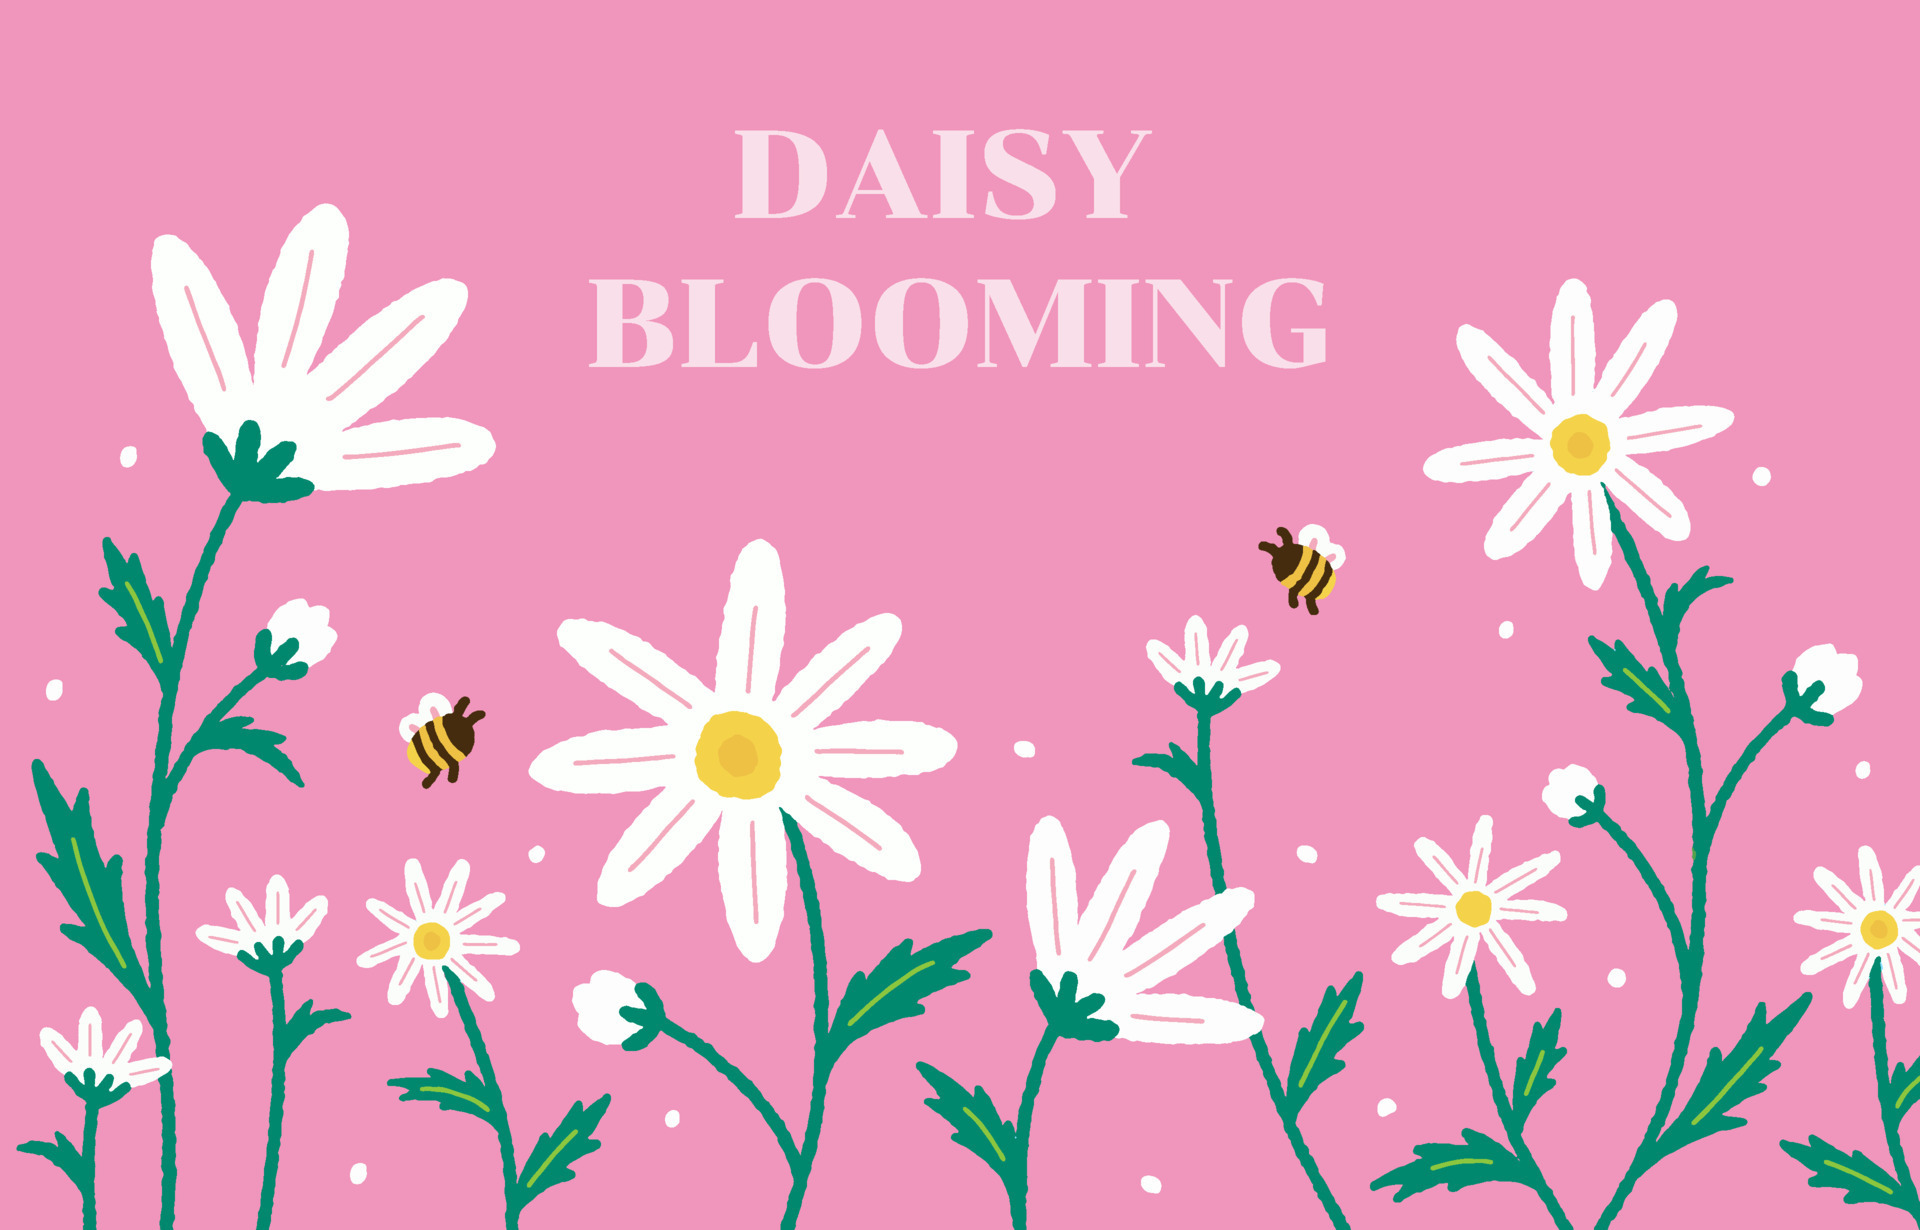 Daisy blooms twitter